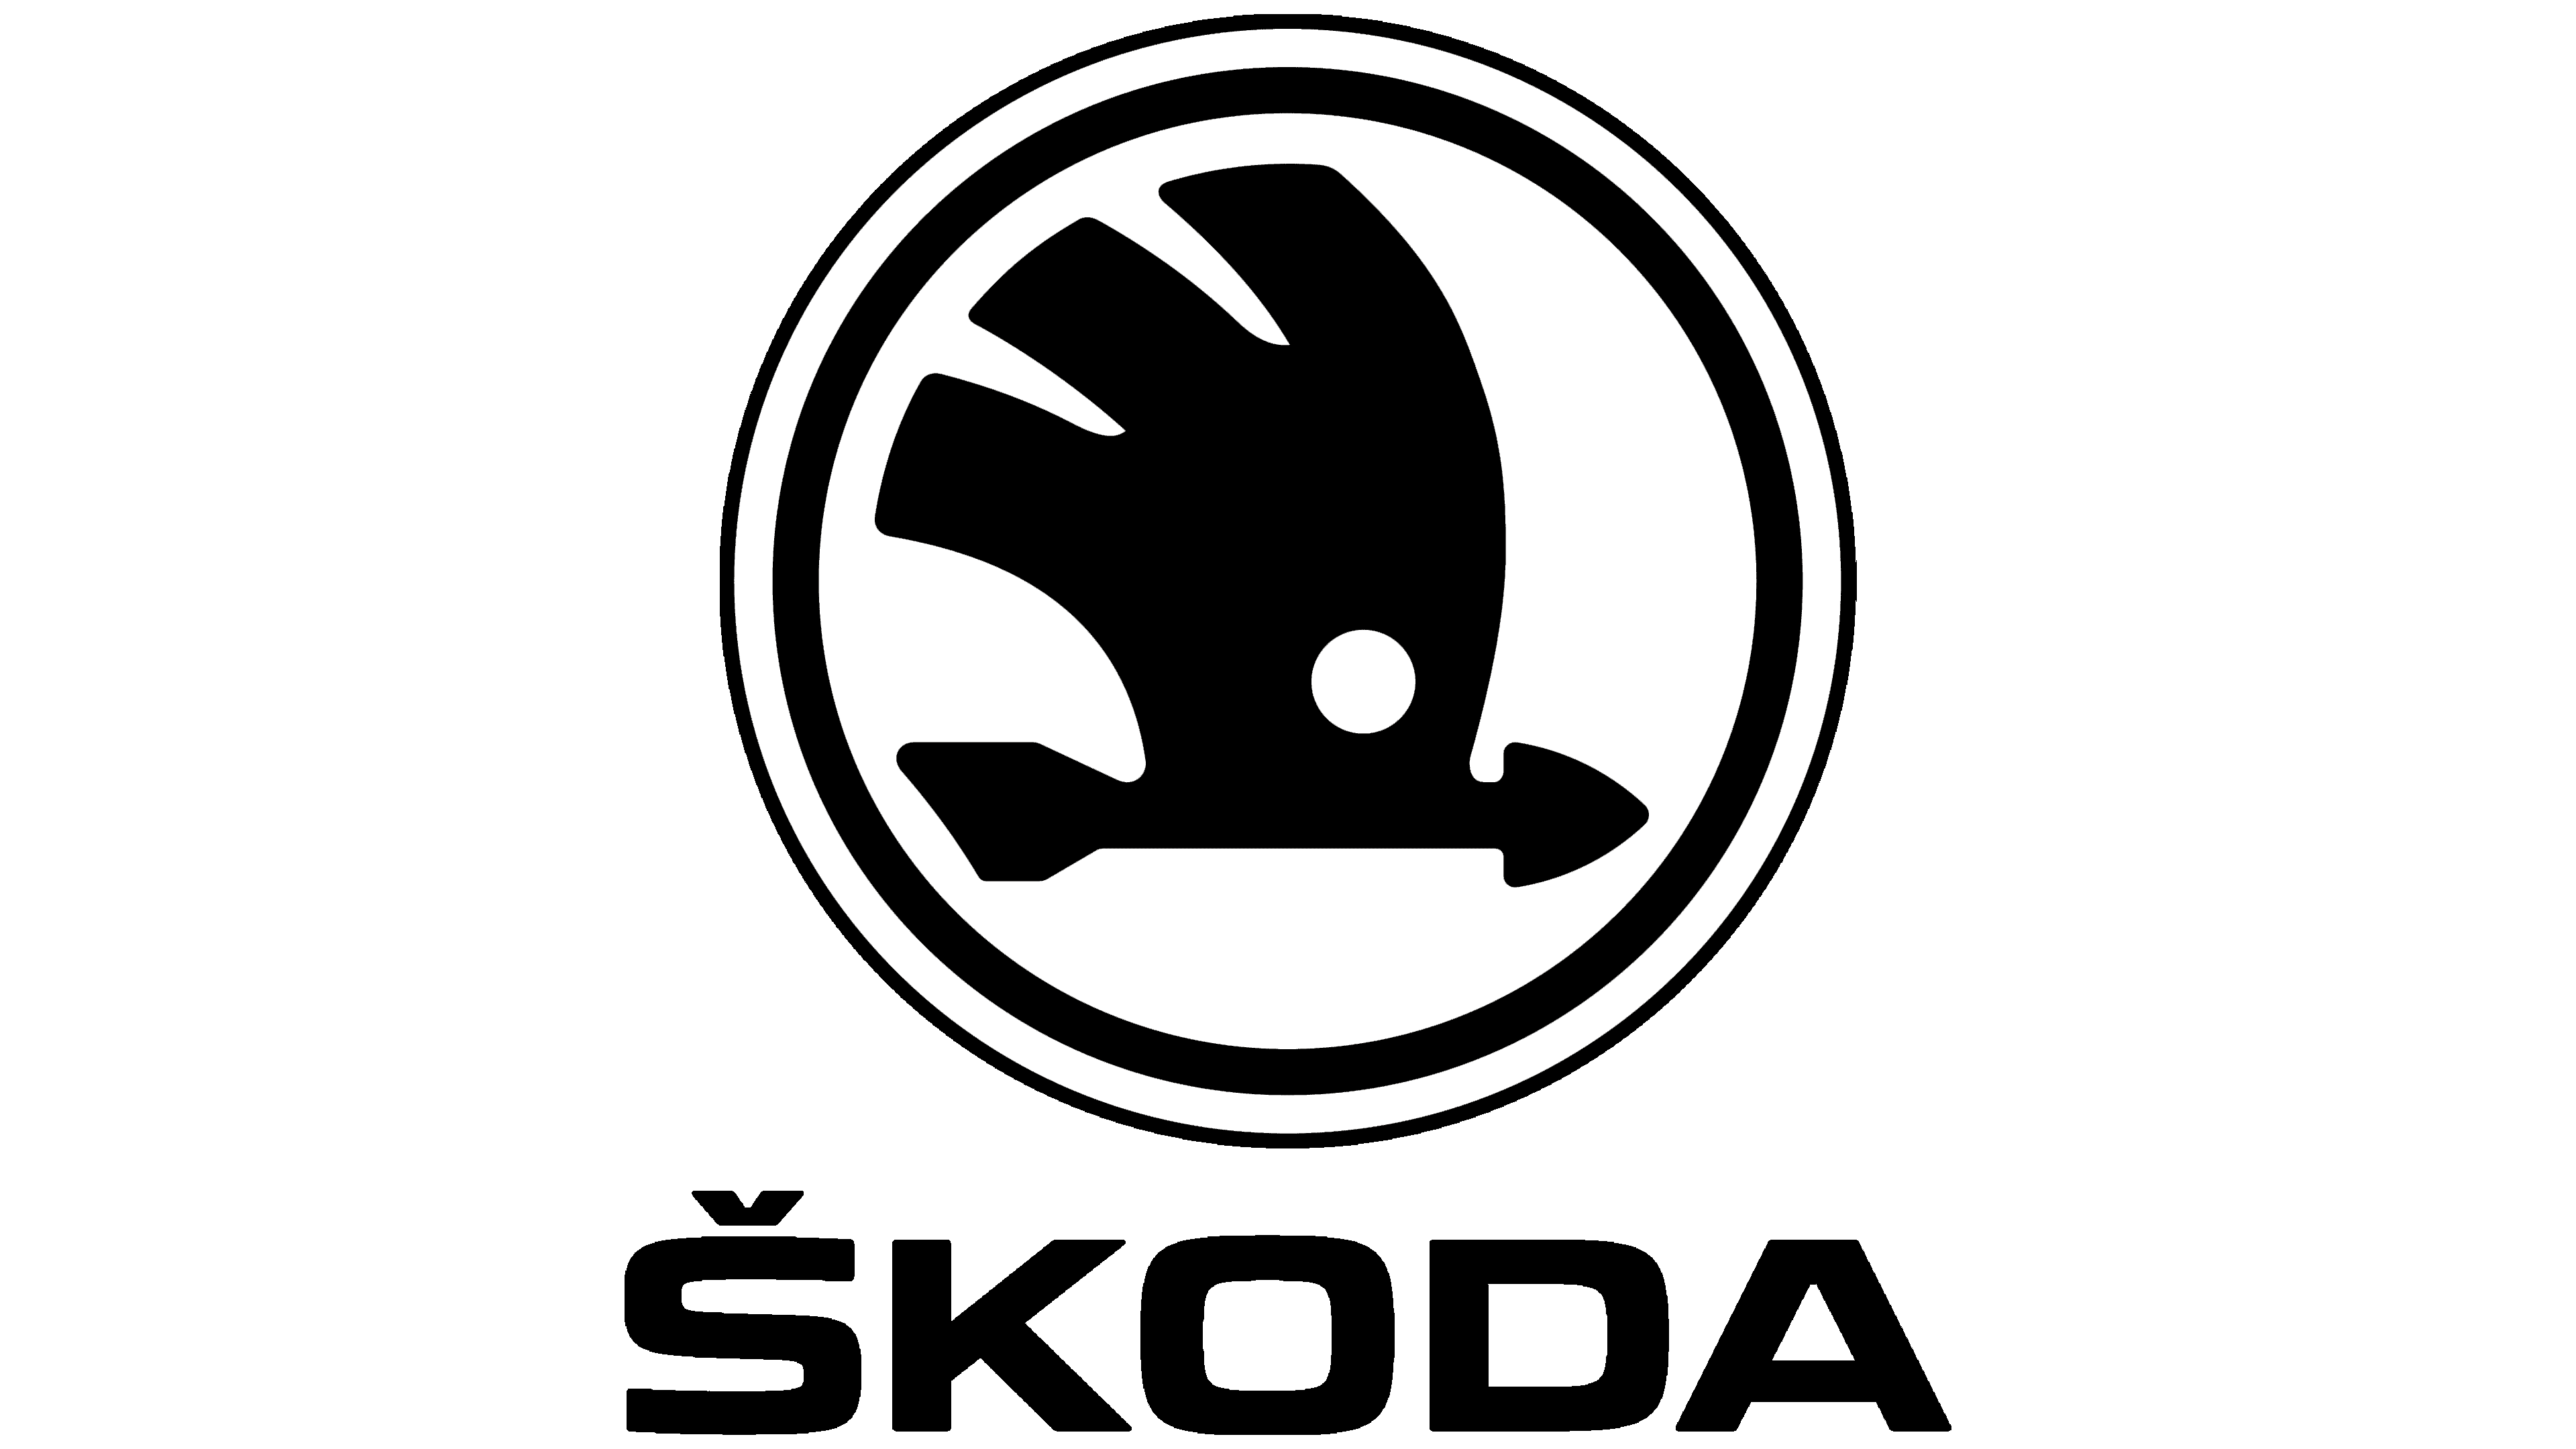 Skoda_logo